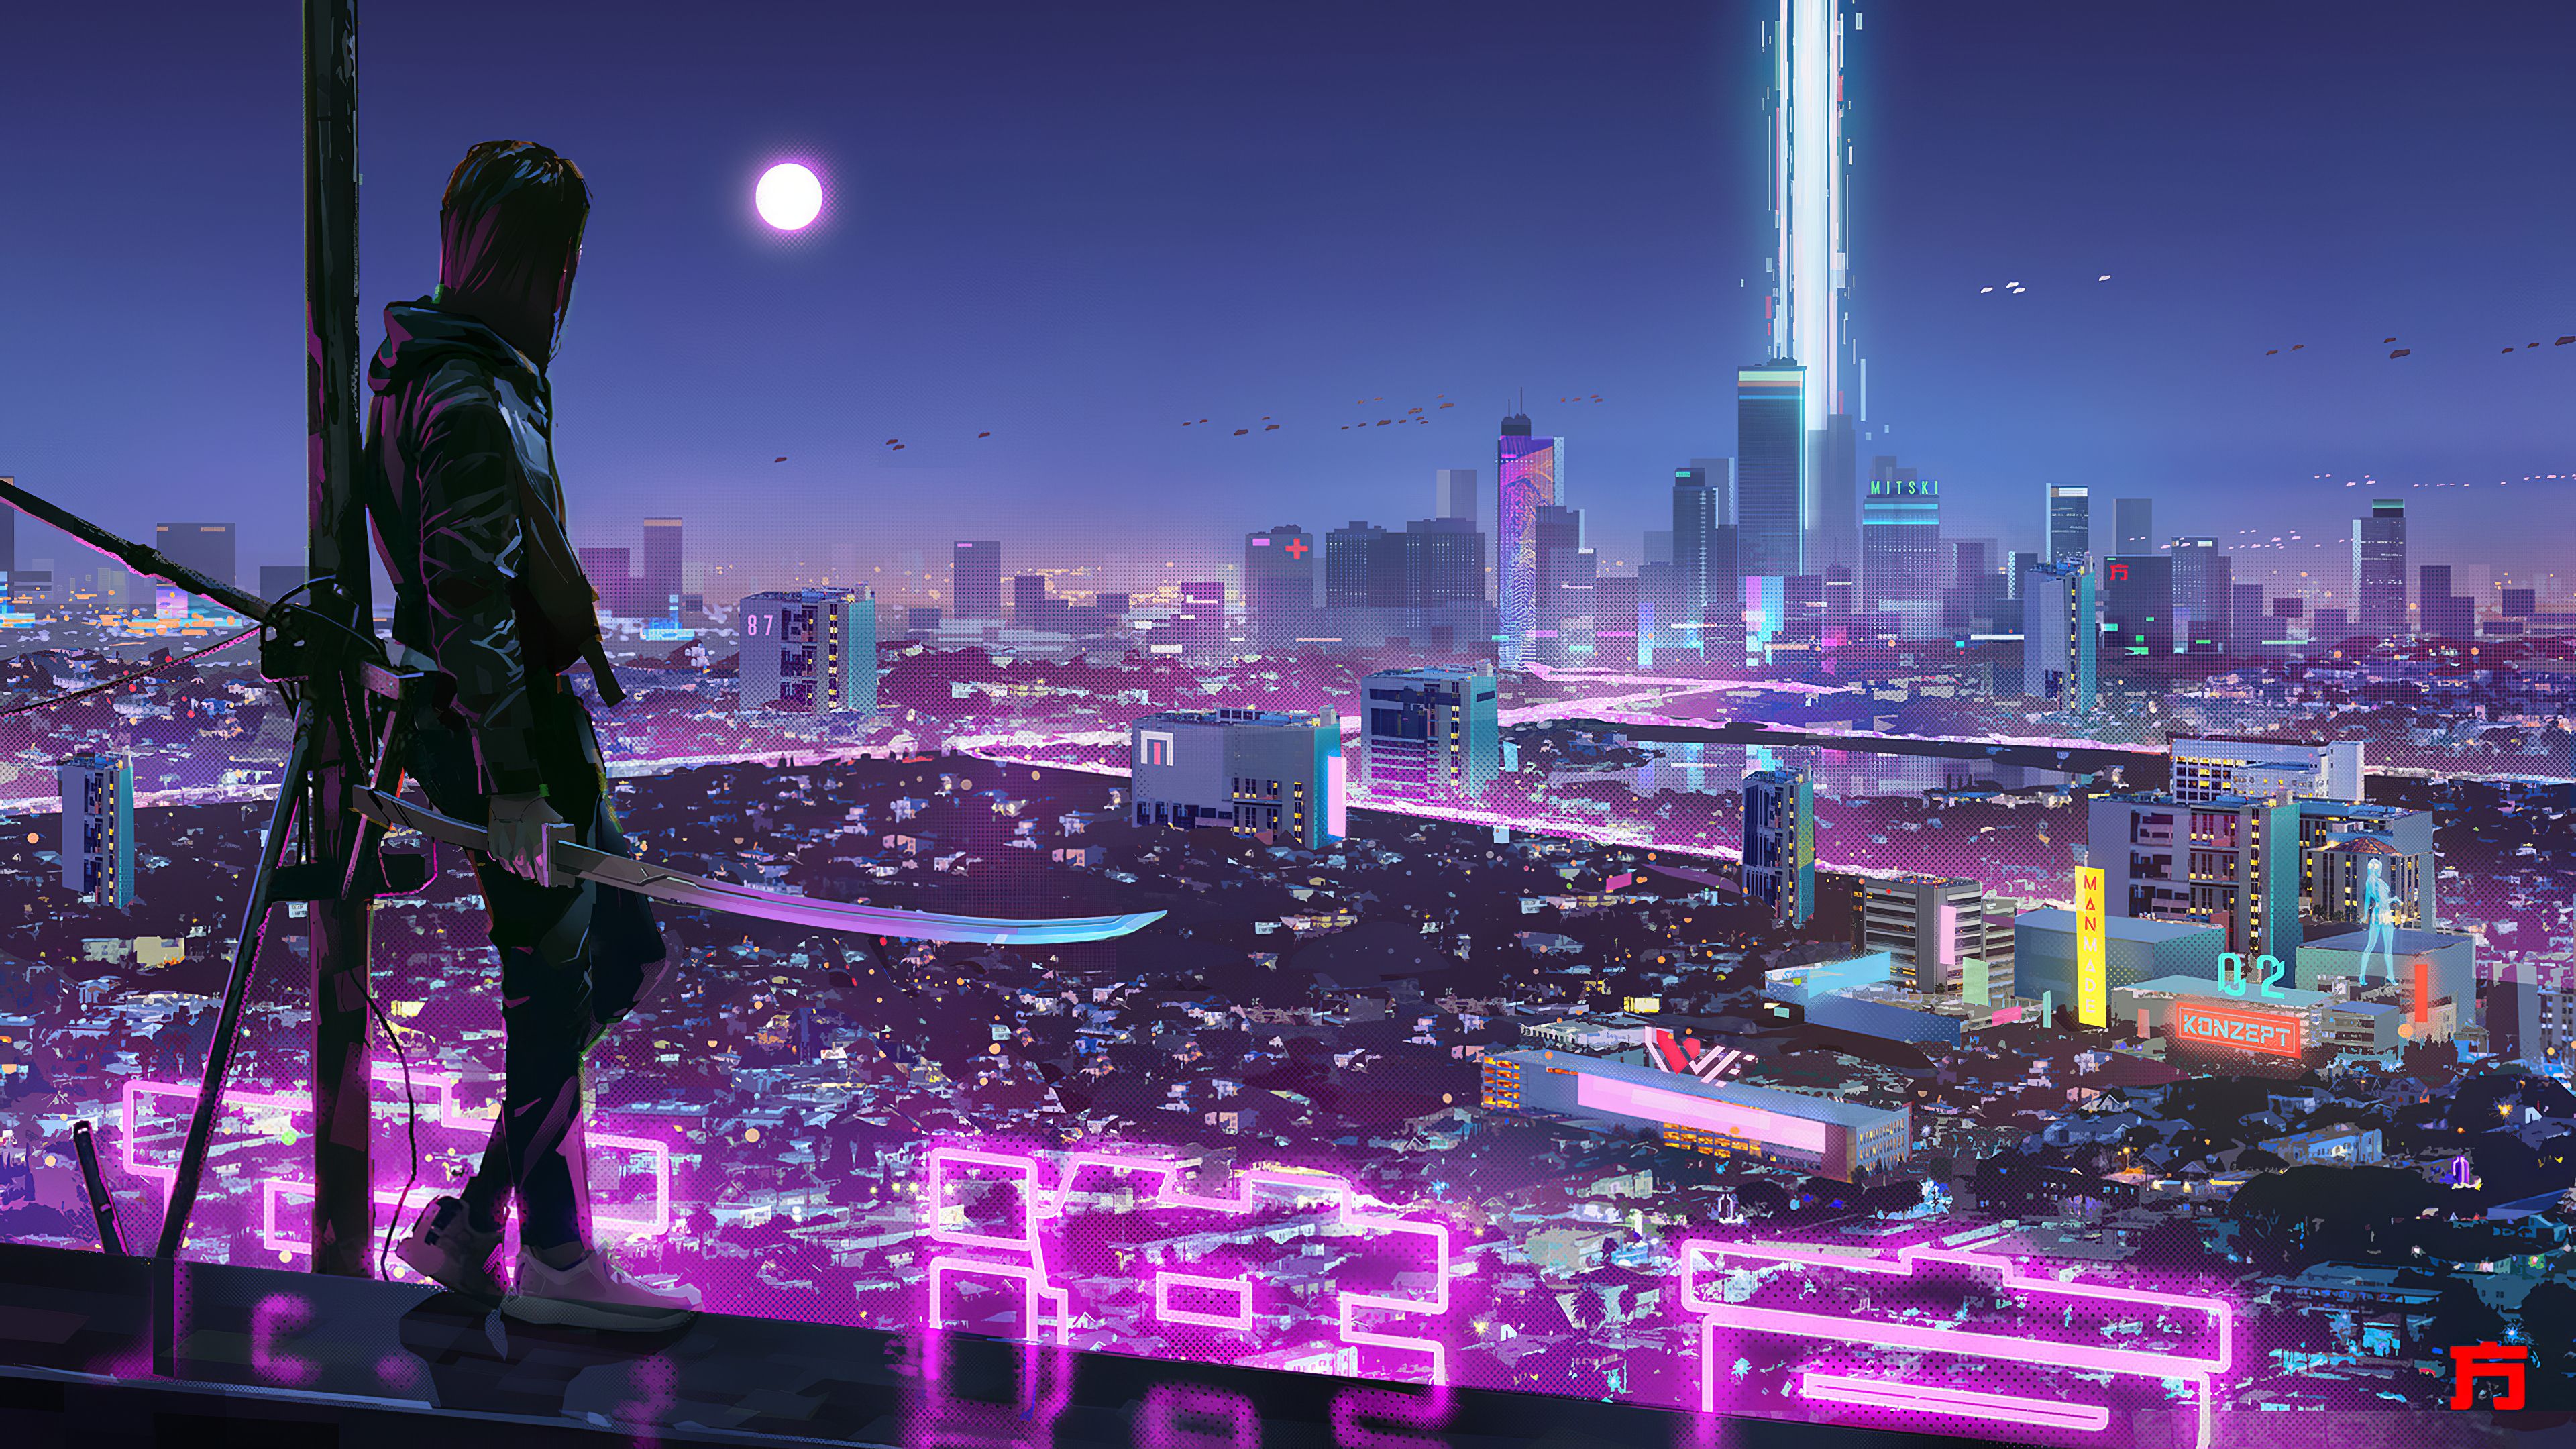 Neon Lights Cyber Ninja Boy 4k, HD Artist, 4k Wallpaper, Image, Background, Photo and Picture